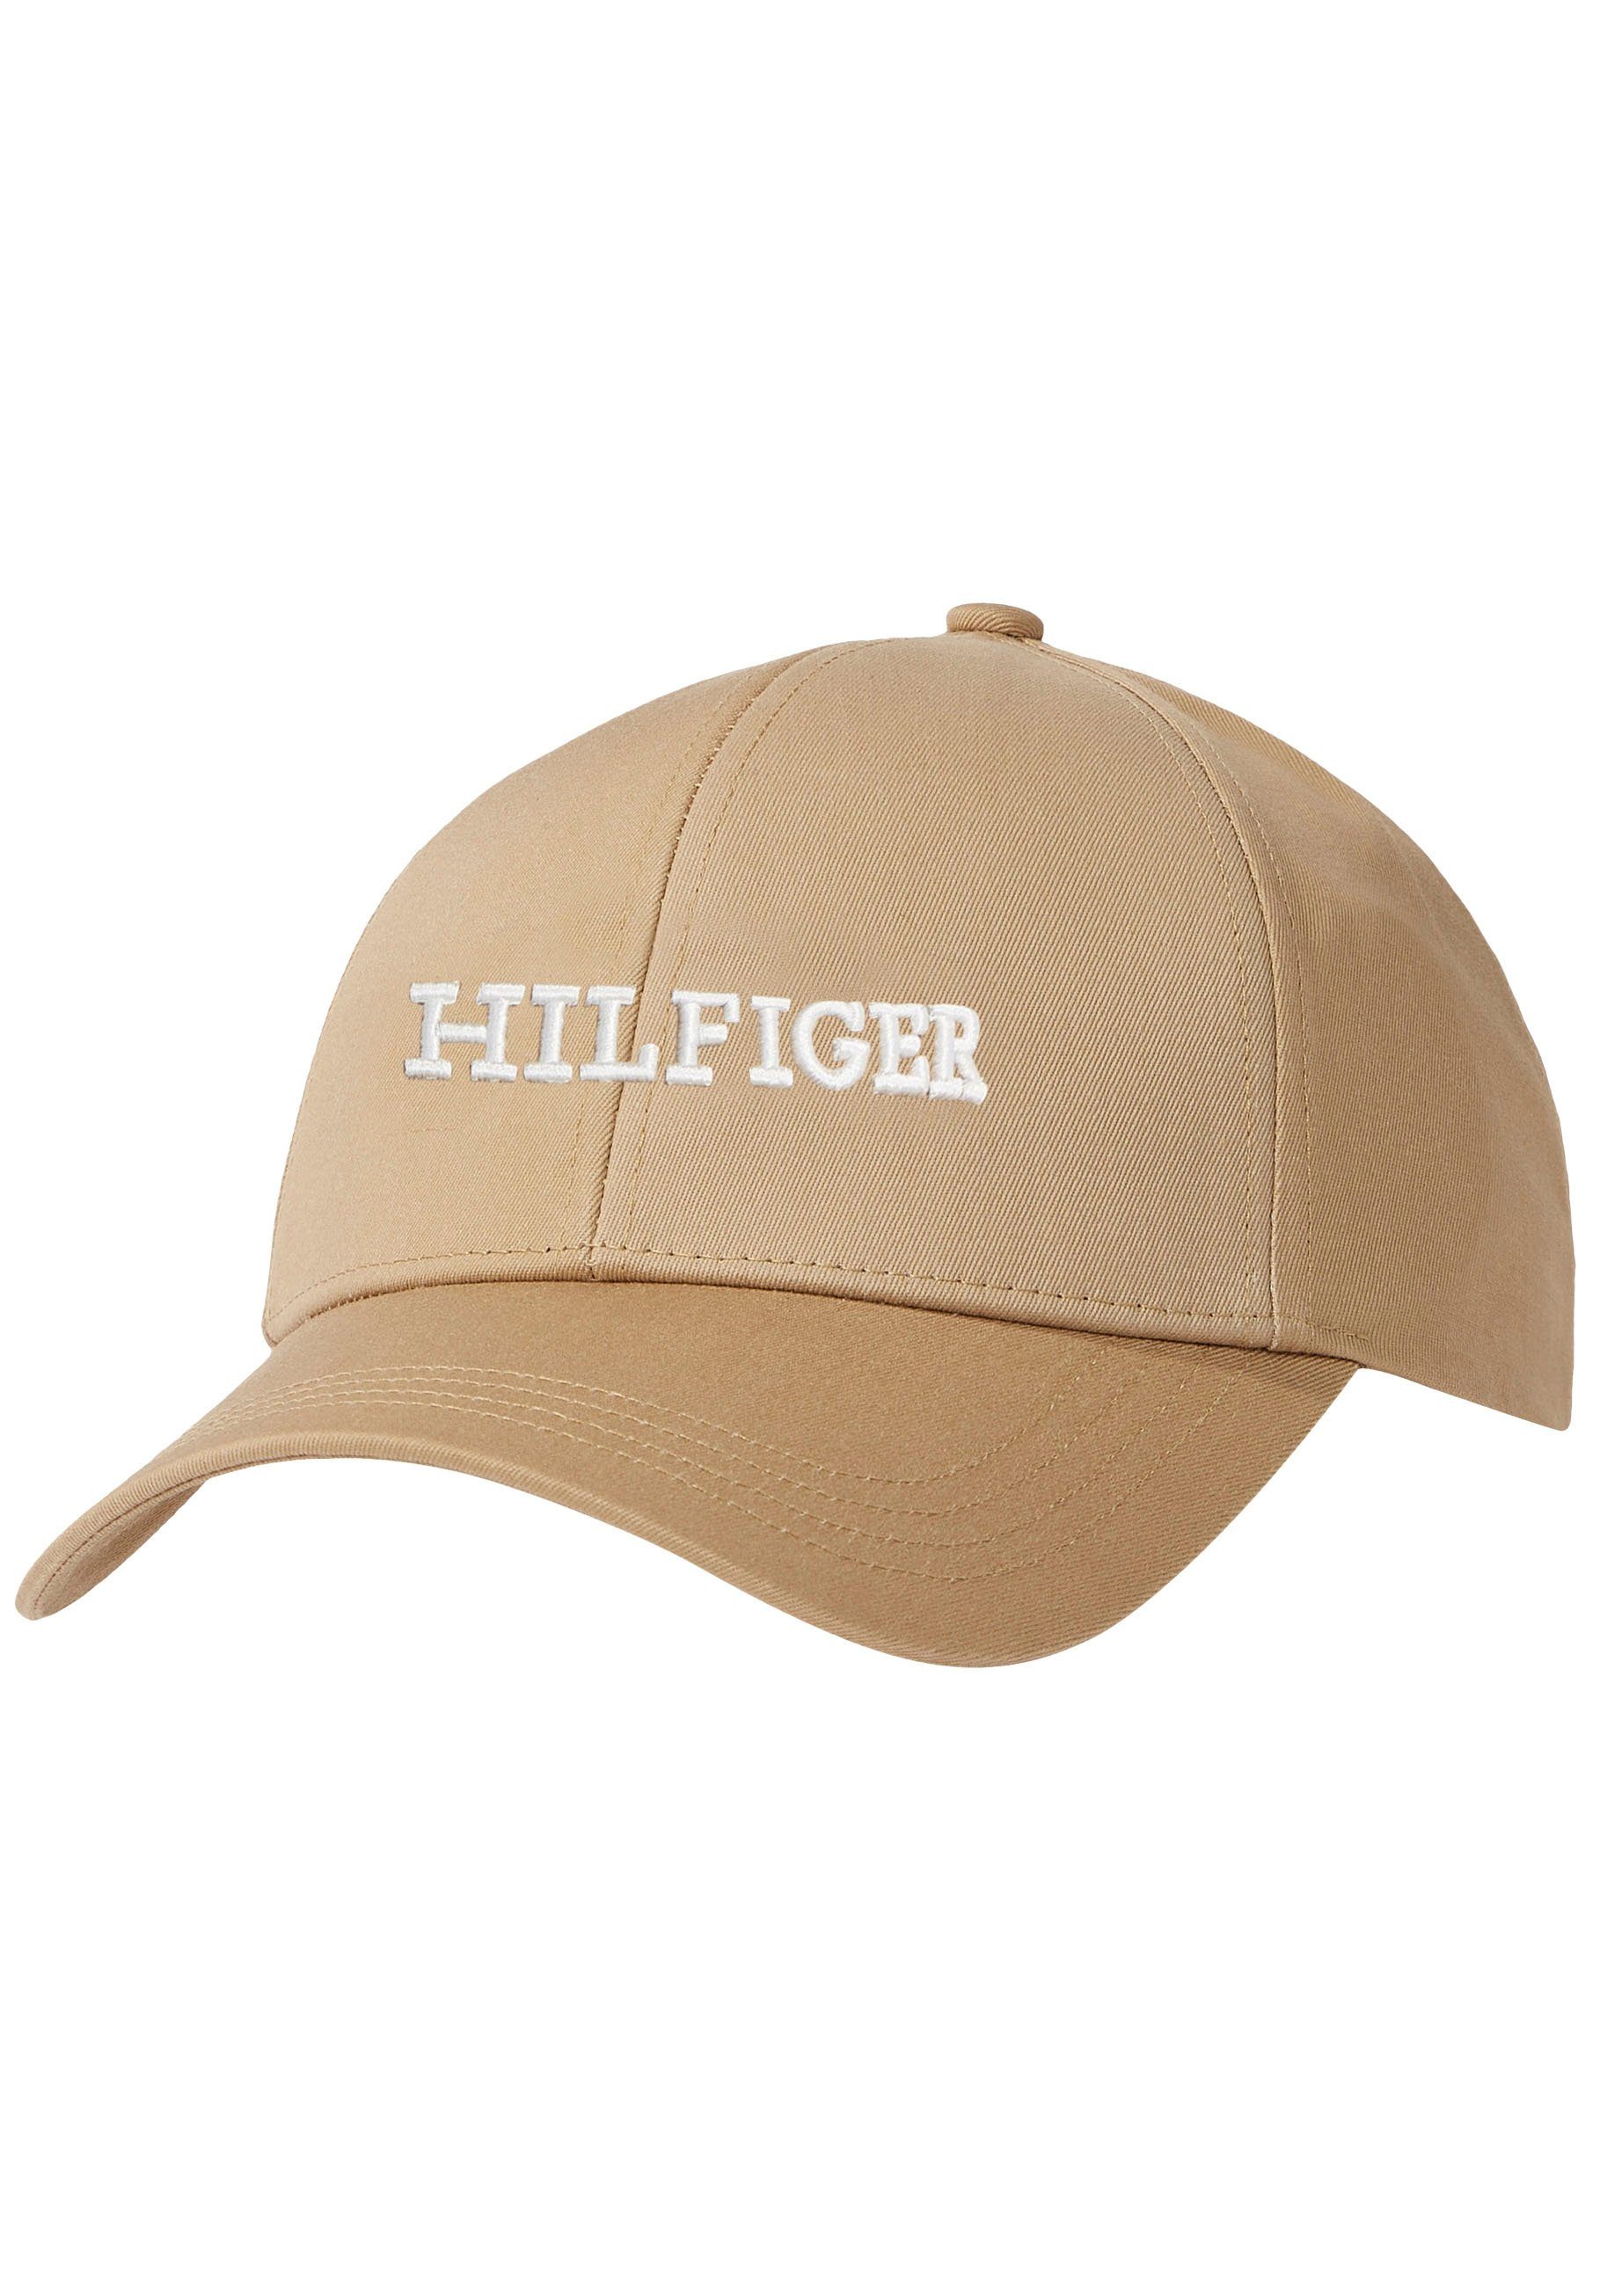 Classic Hilfiger gesticktem Khaki HILFIGER Cap mit vorn Hilfiger Monogramm CAP Tommy Baseball